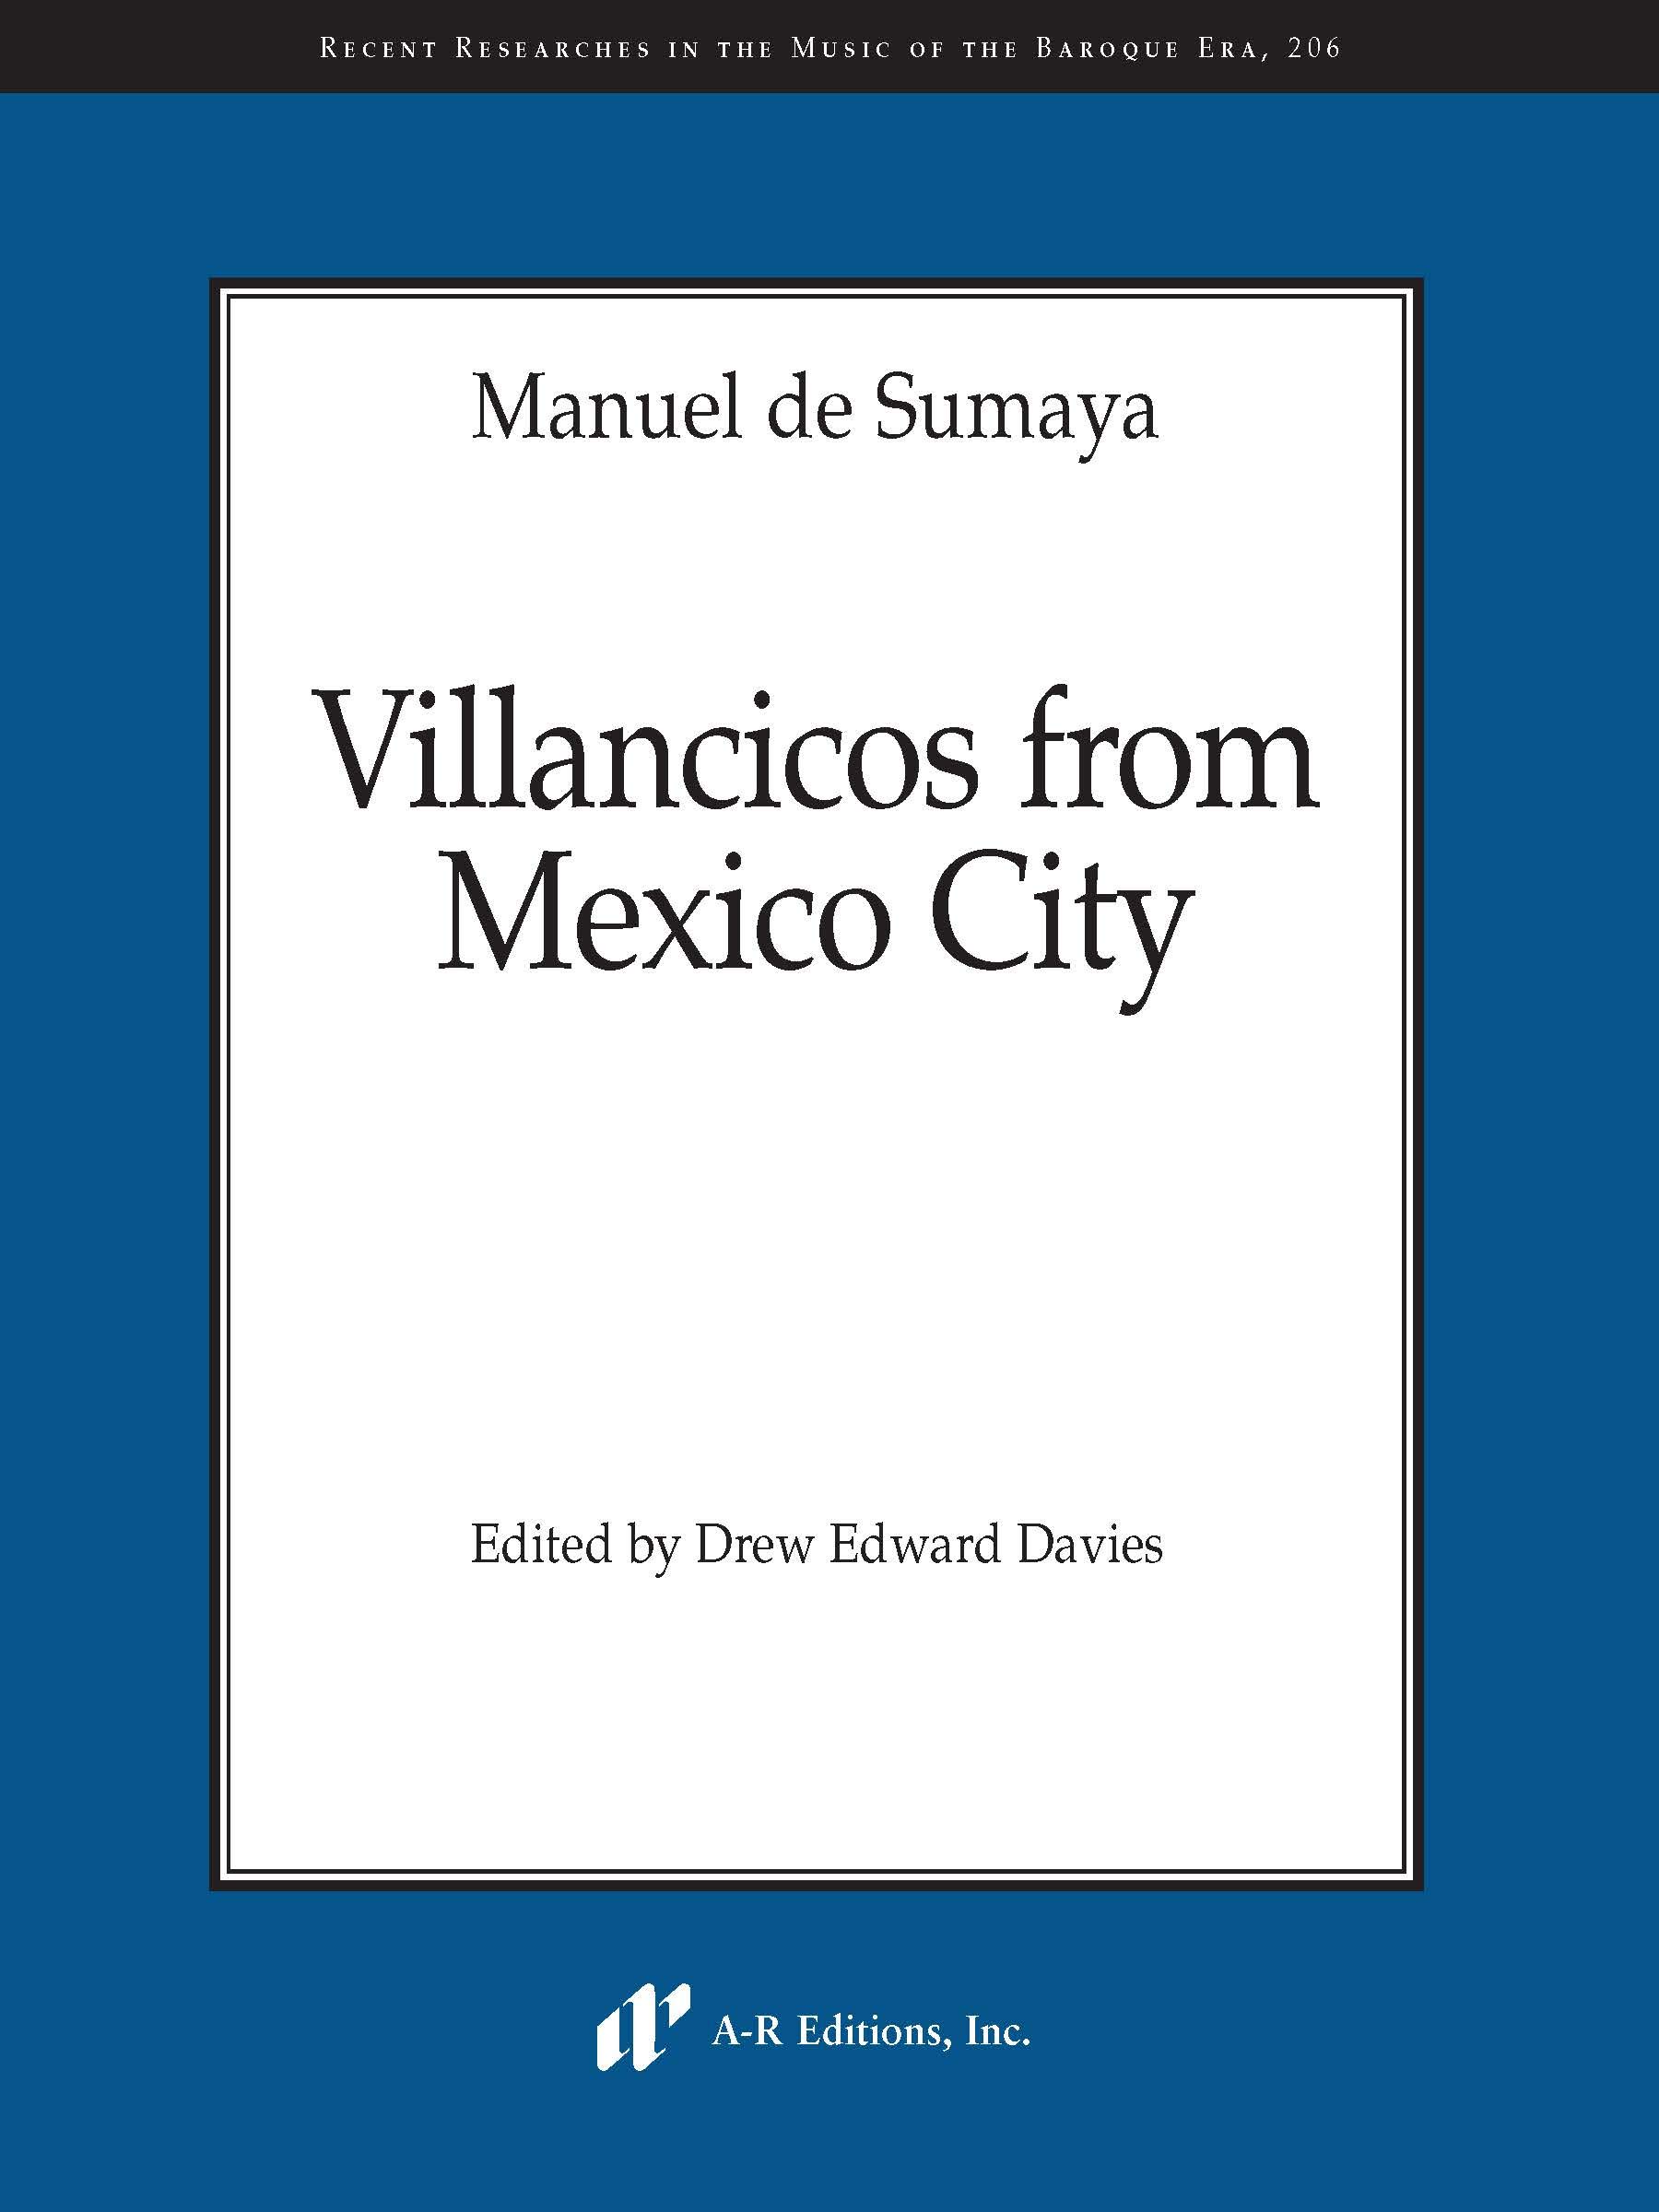 Cover of Recent Researchs 206 Sumaya Villancicos